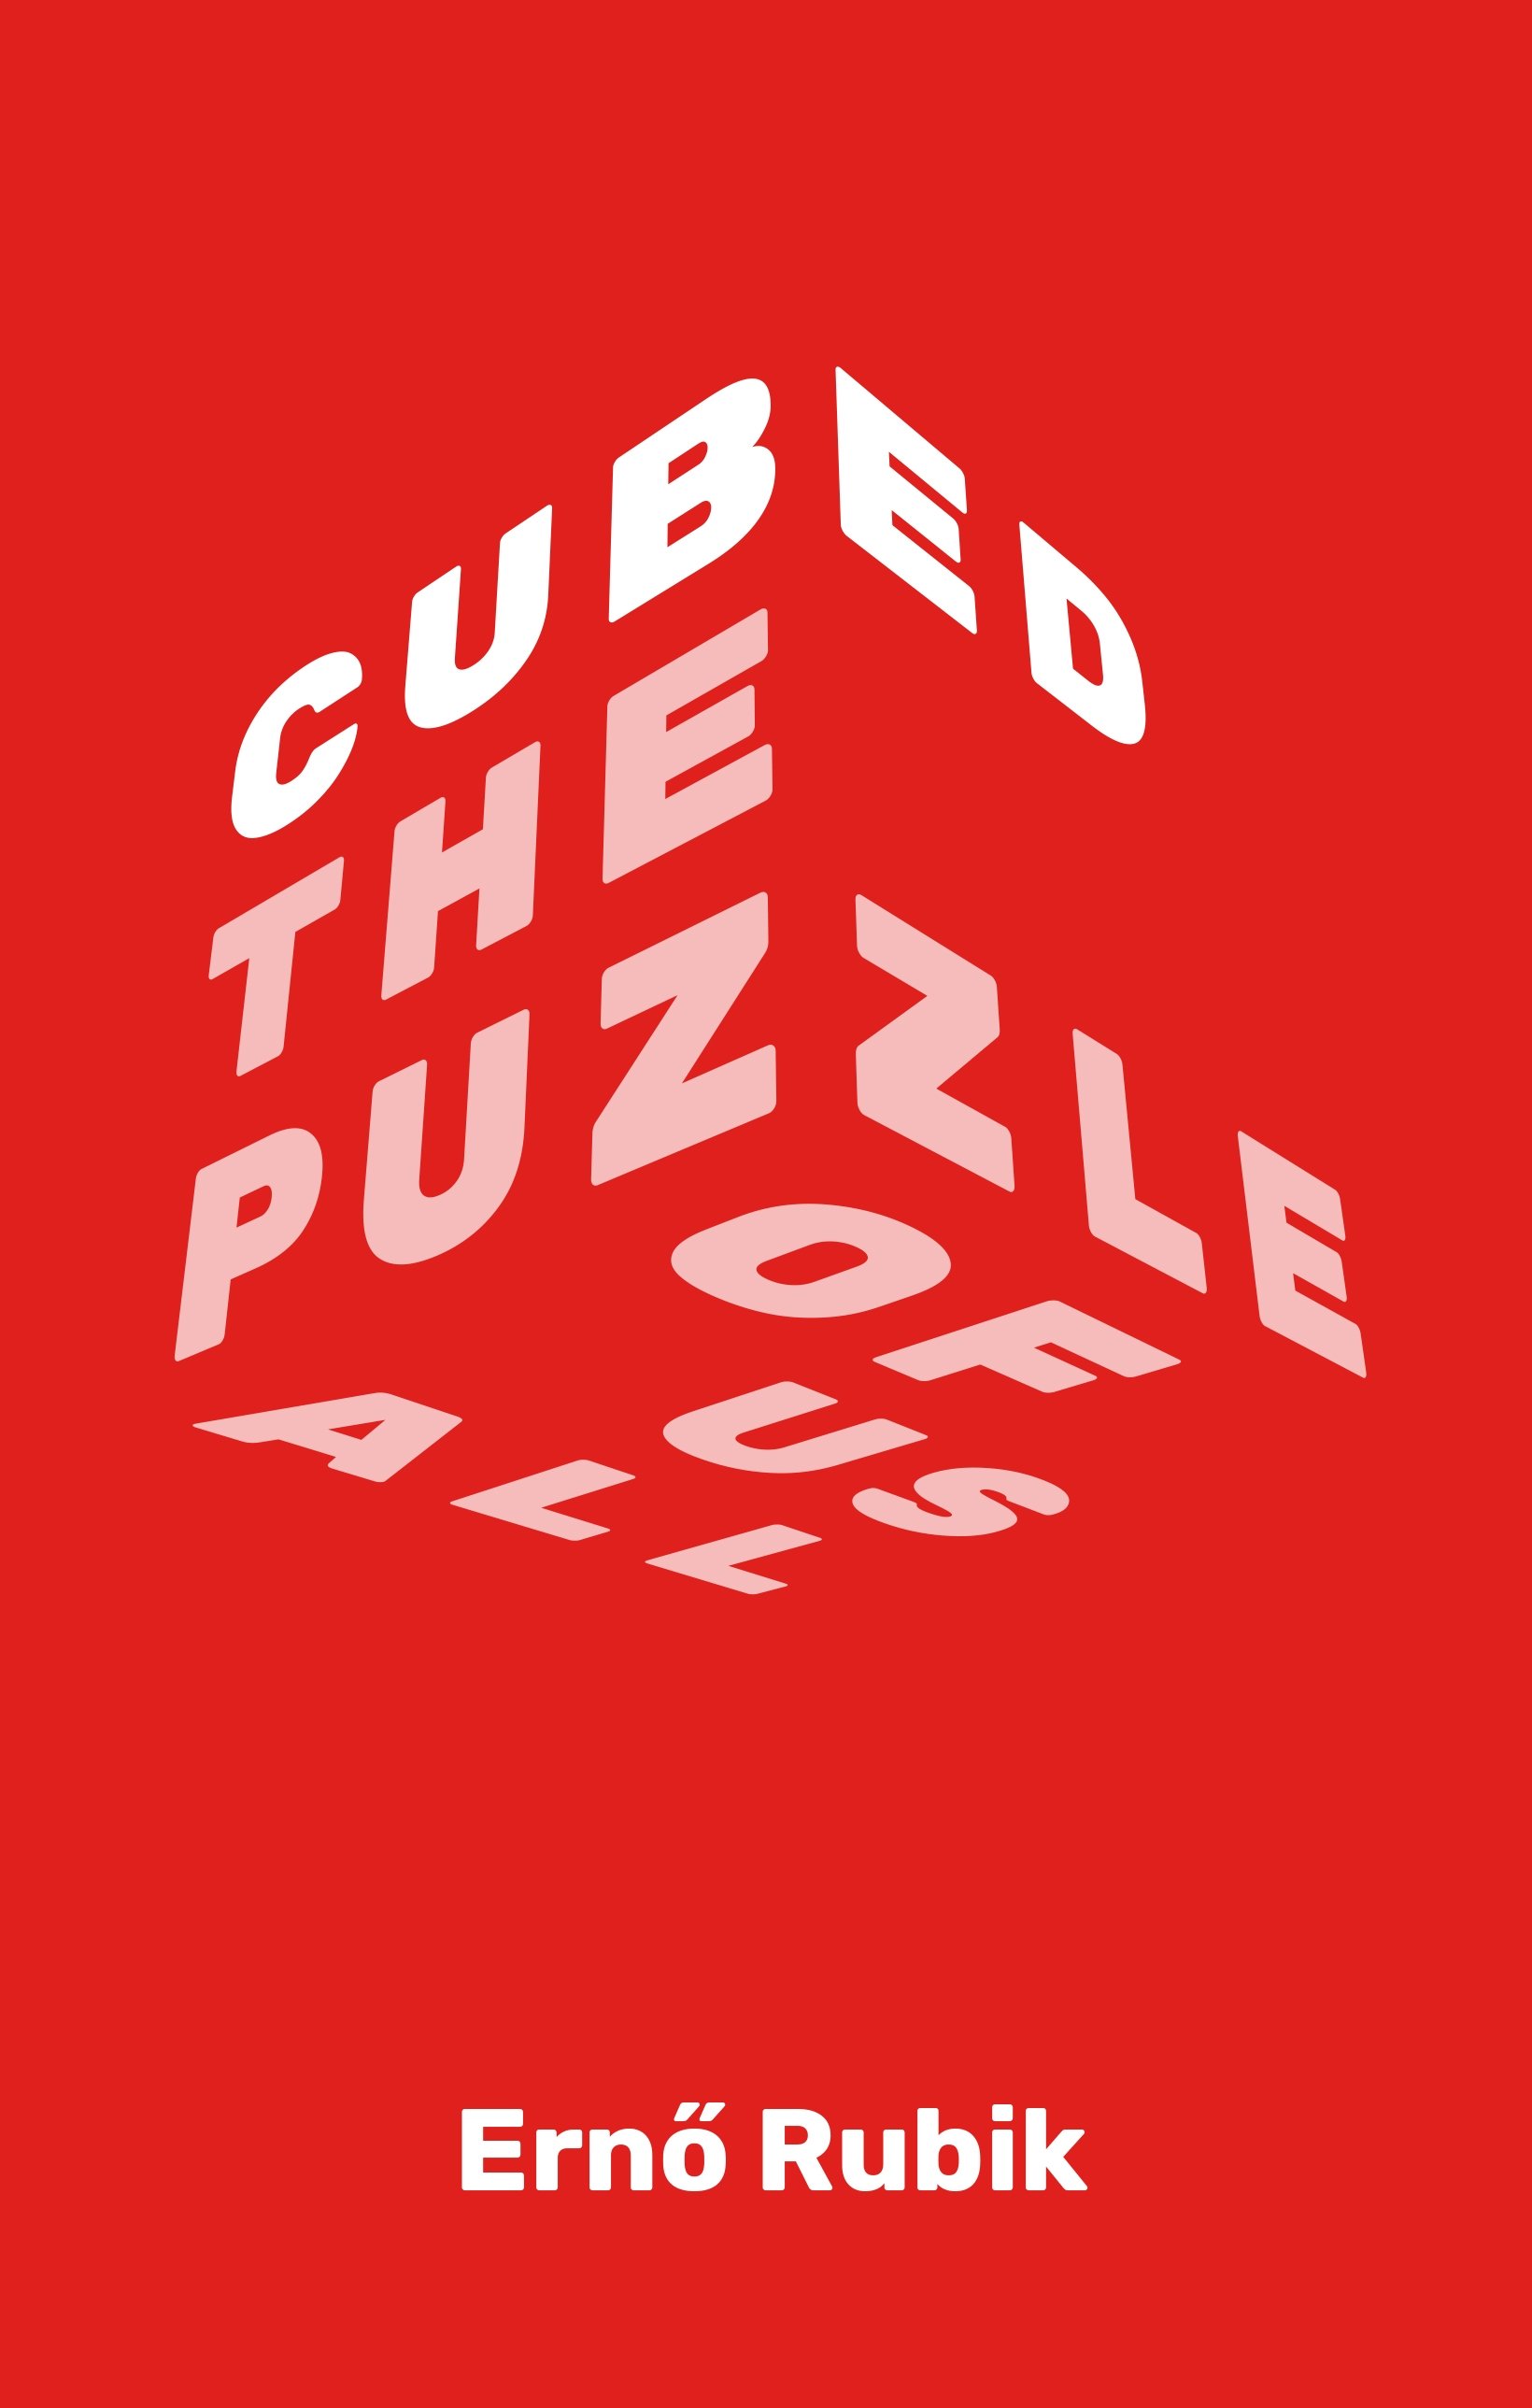 Book “Cubed” by Erno Rubik — September 15, 2020